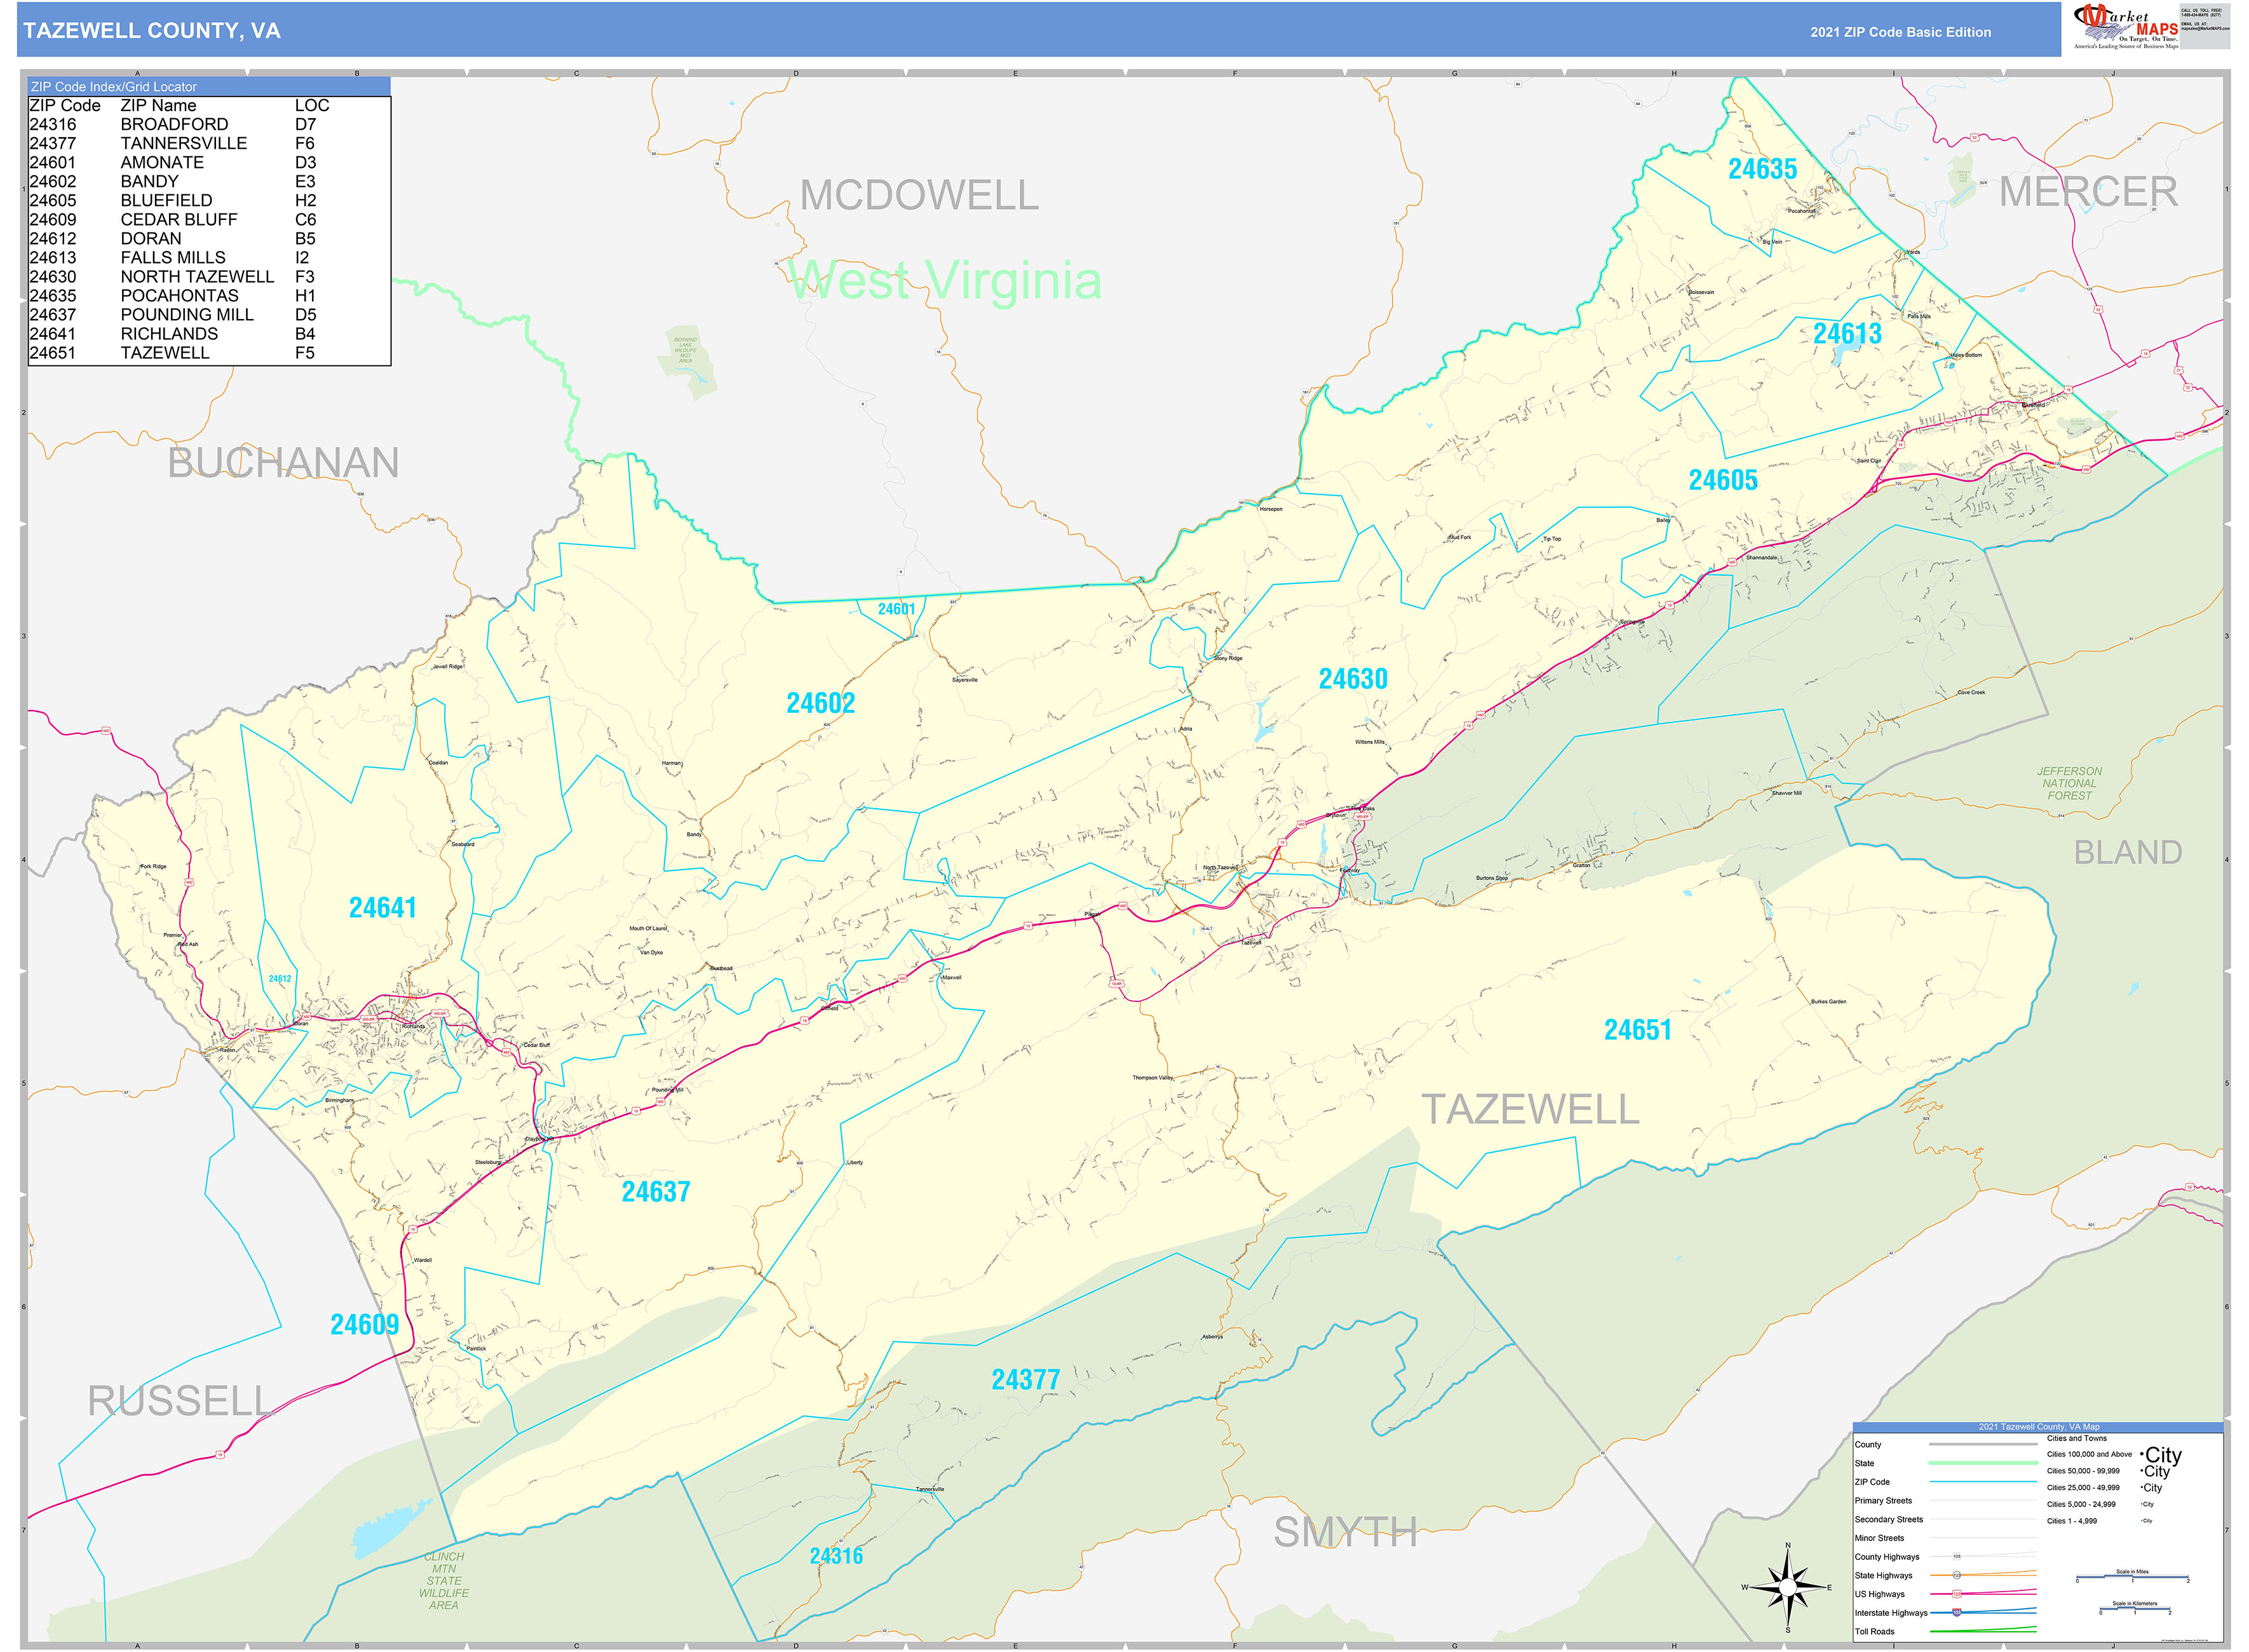 Tazewell County, VA Zip Code Wall Map Basic Style by MarketMAPS